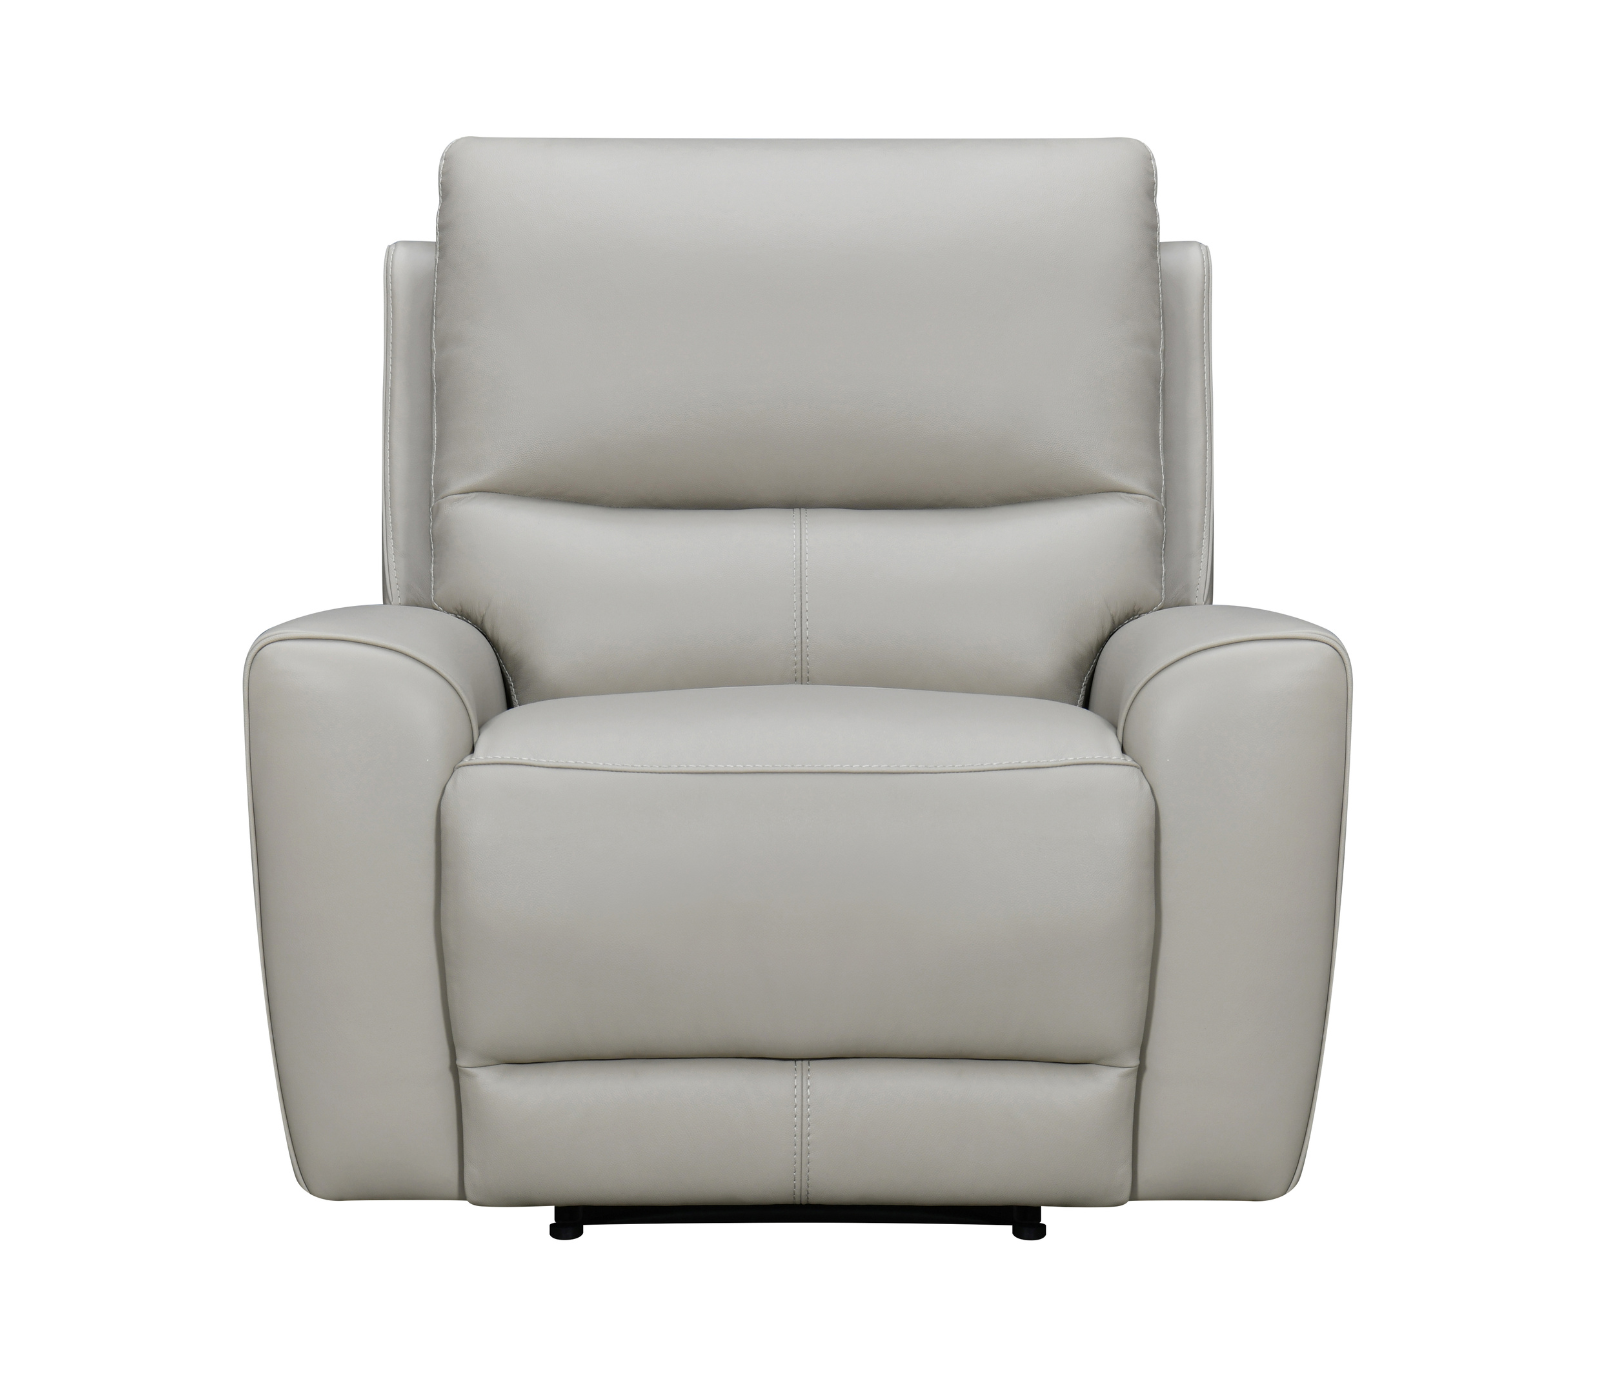 Alonzo Chair - Triple Power - Light Grey Leather